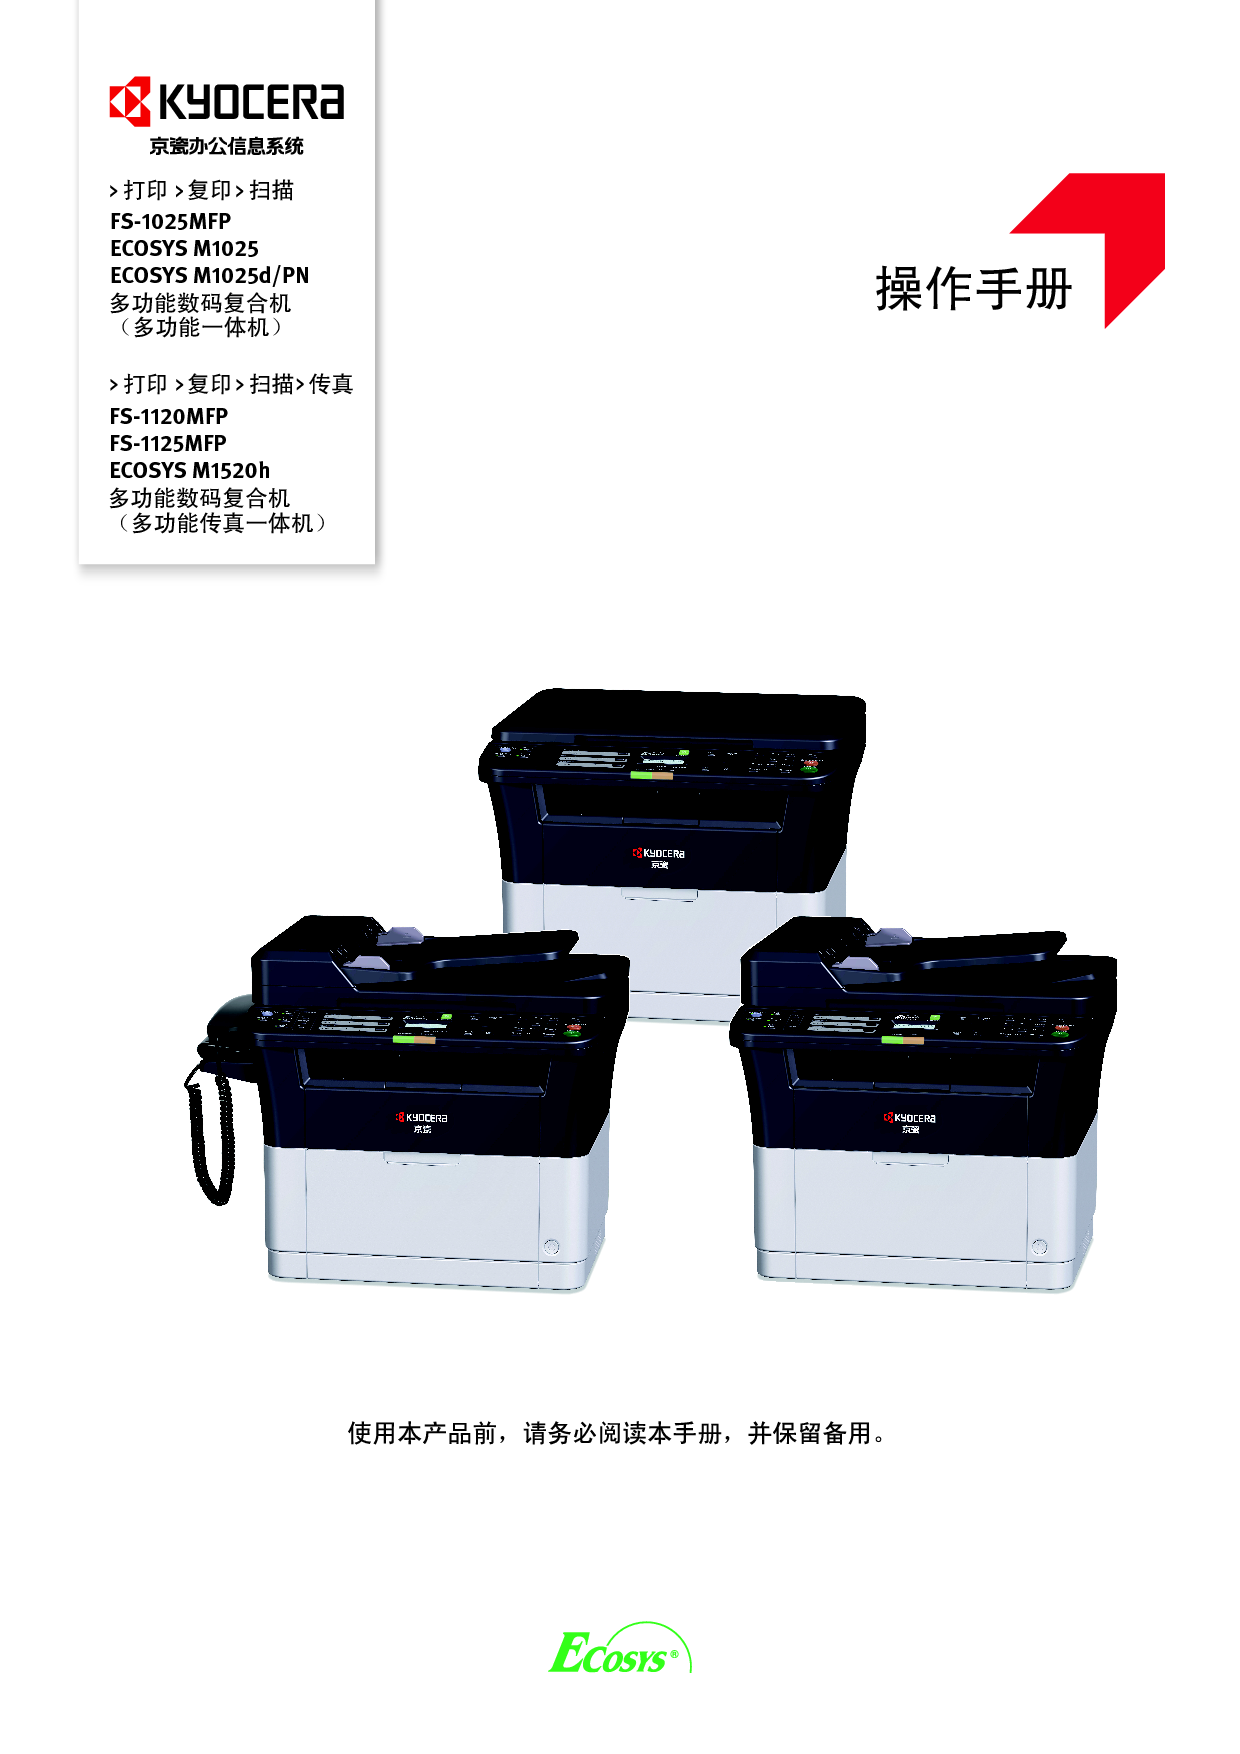 京瓷 Kyocera ECOSYS M1025, FS-1025MFP 操作手册 封面